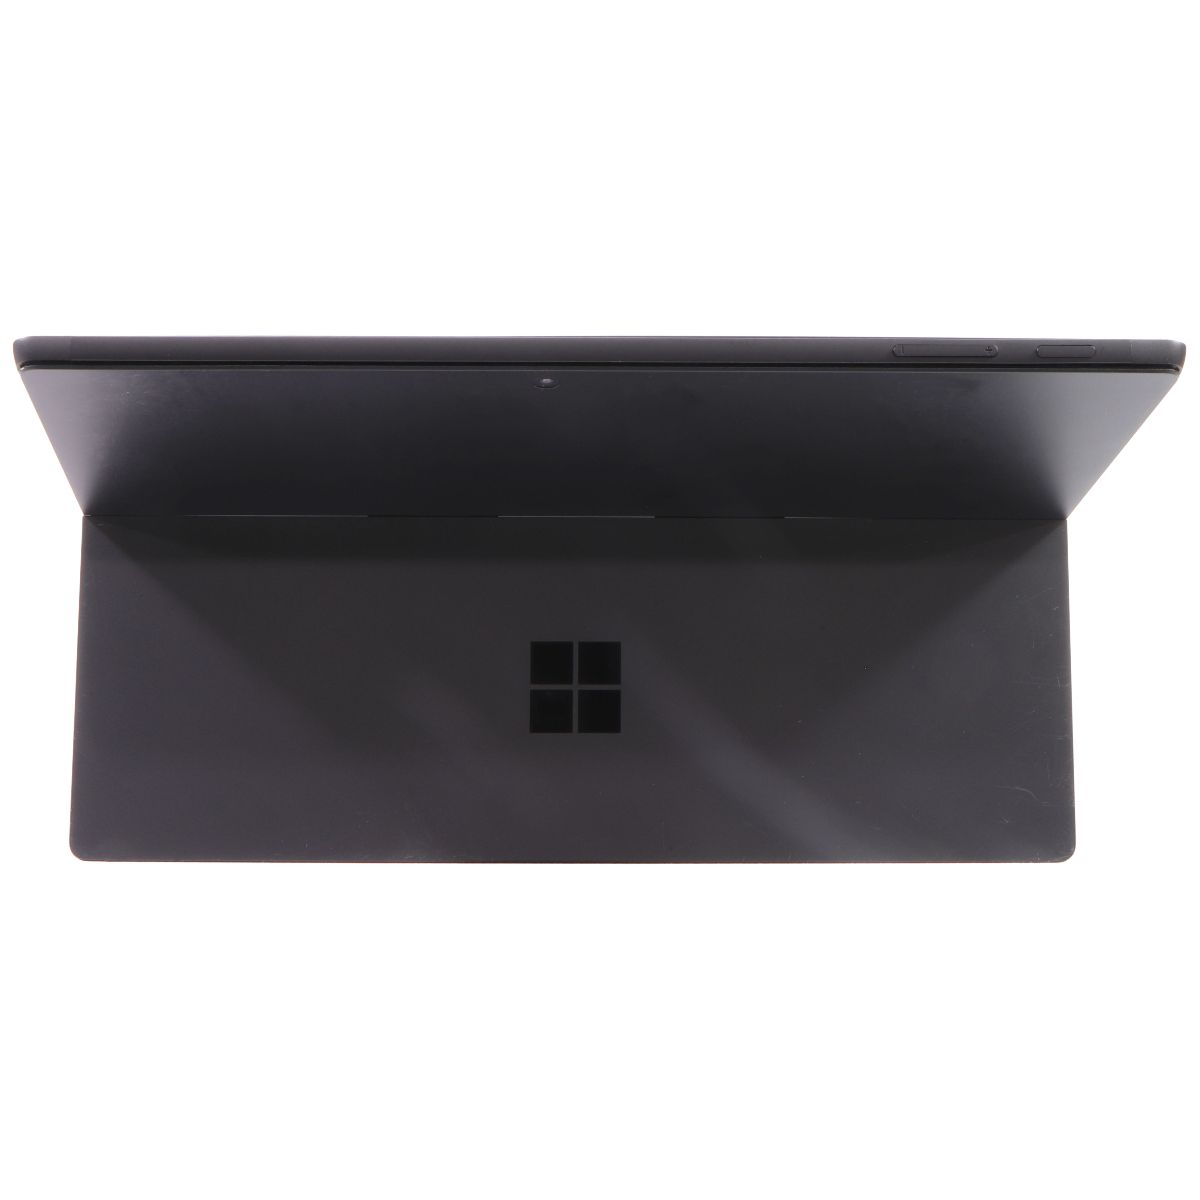 Microsoft Surface Pro 7 (1866) Intel i7-1065G7/16GB RAM Windows 10 Home - Black